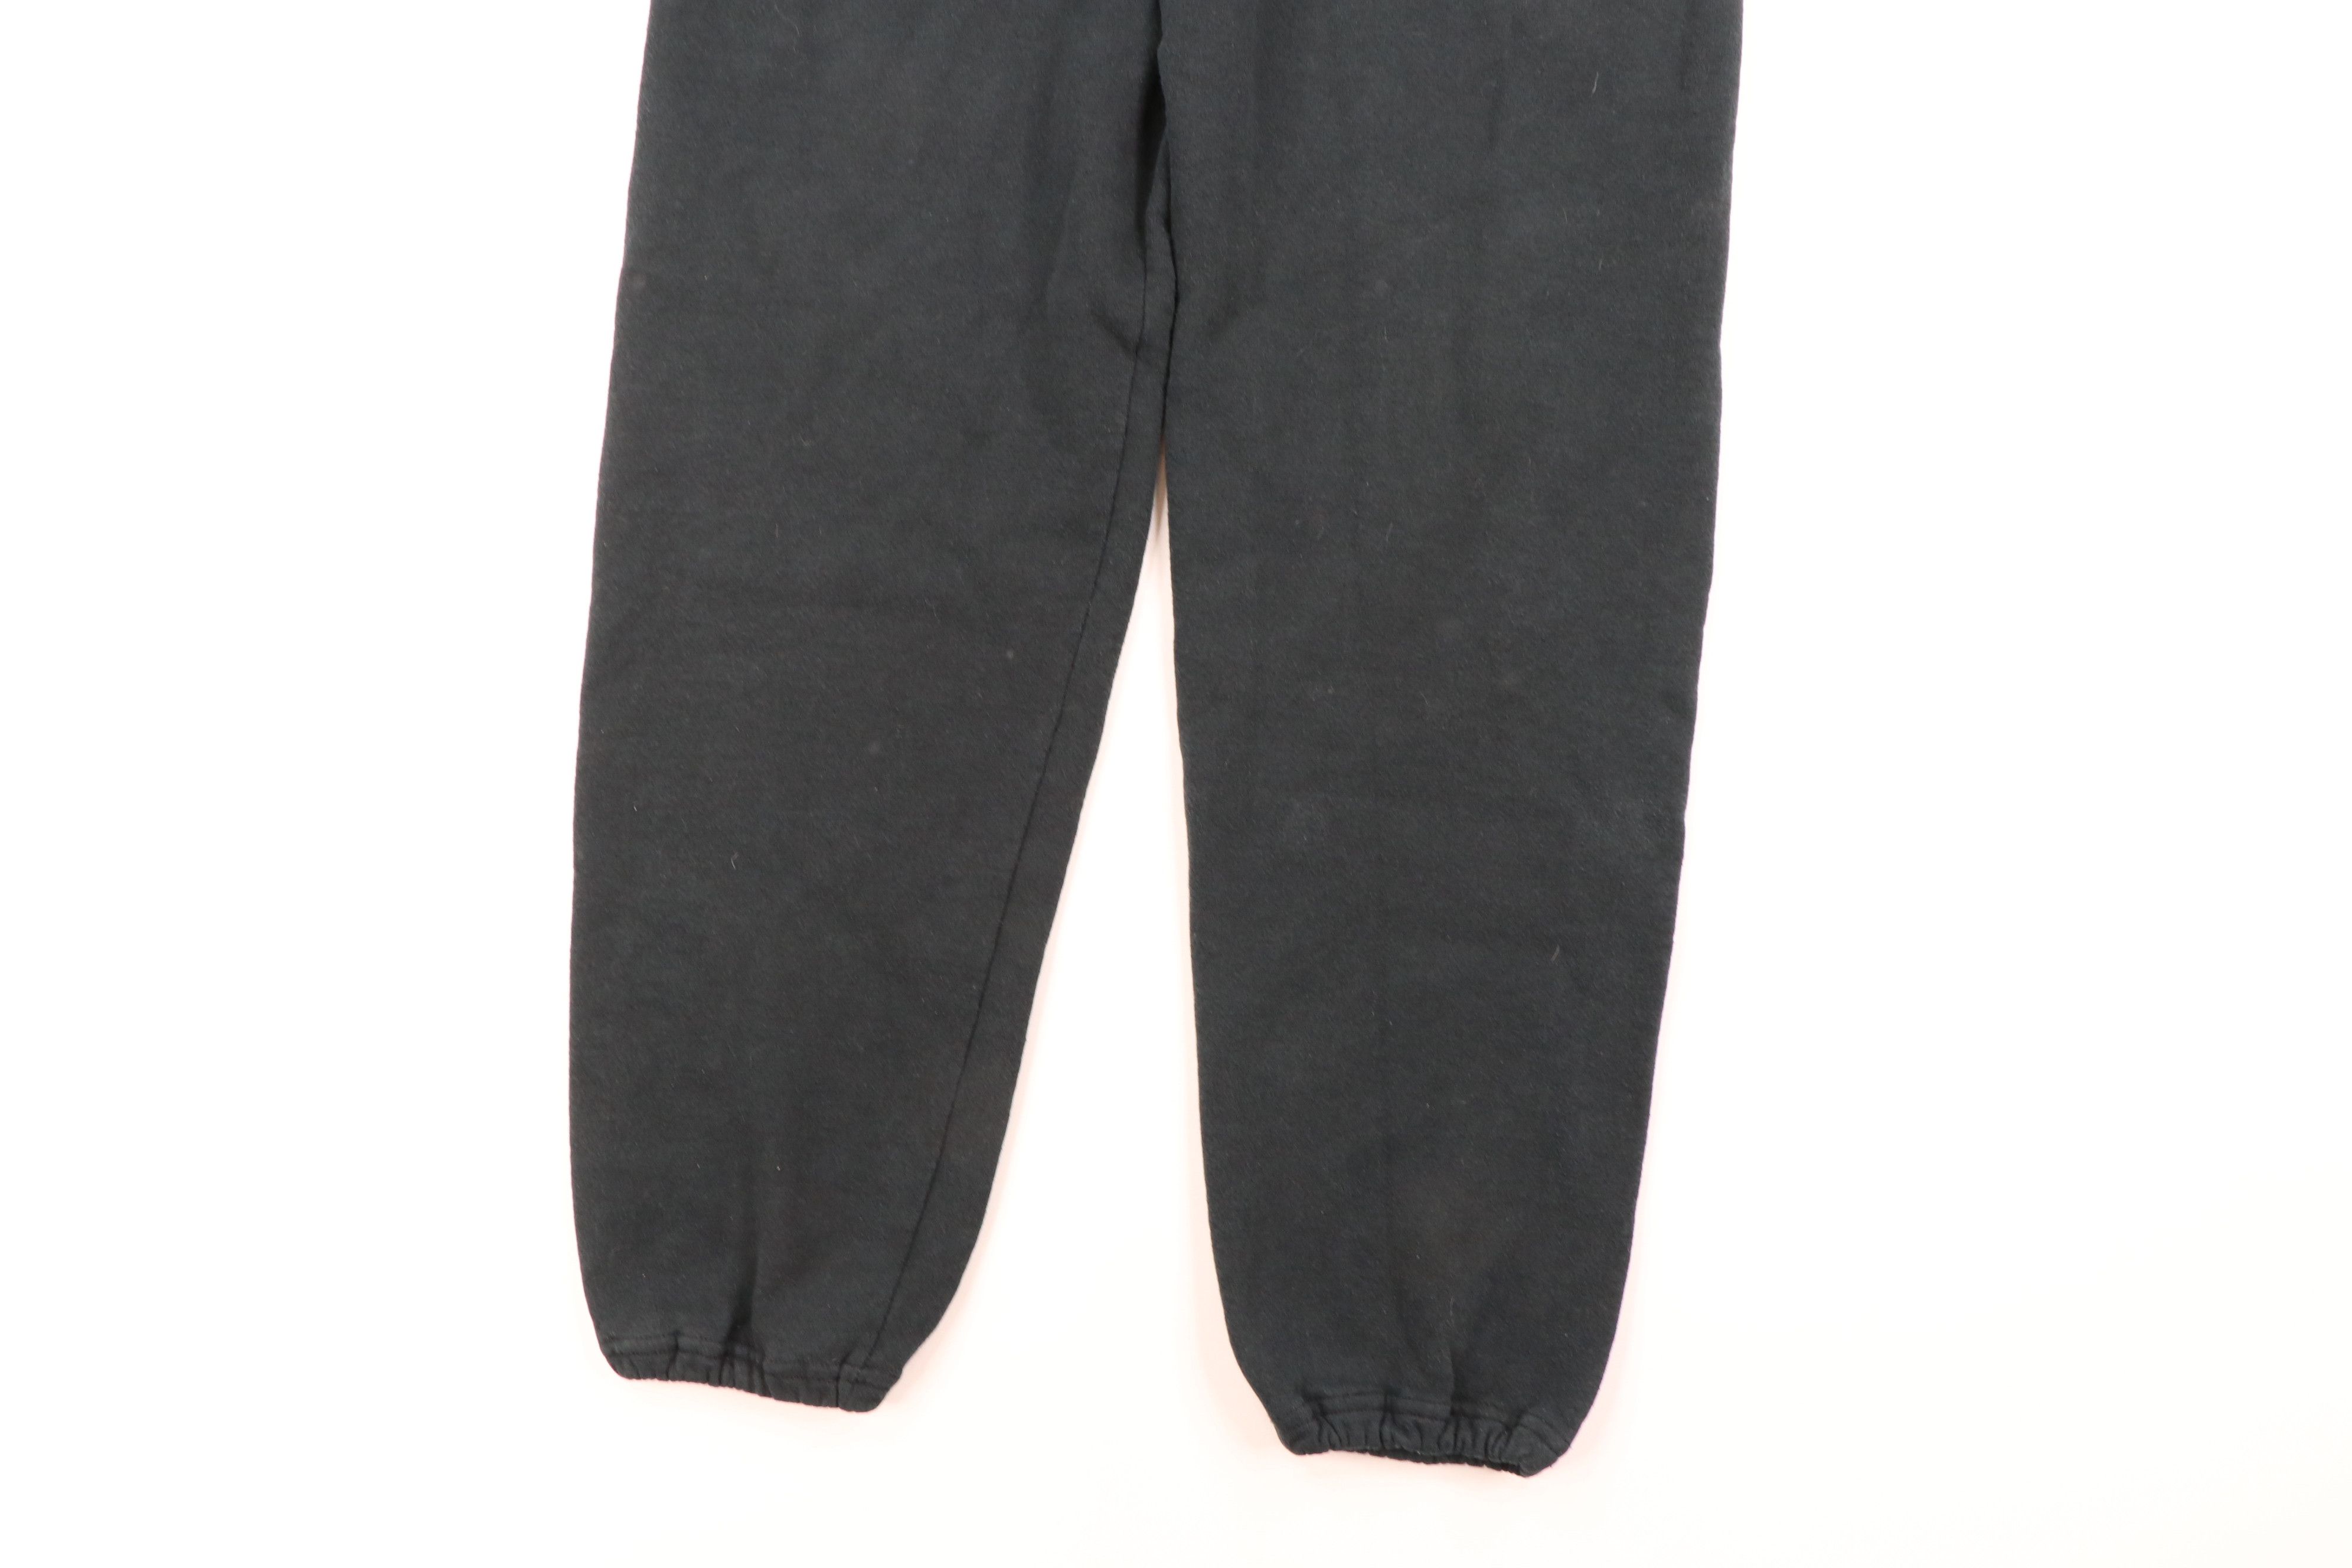 Vintage Vintage 90s Streetwear Faded Blank Sweatpants Joggers Pants Size US 36 / EU 52 - 7 Preview